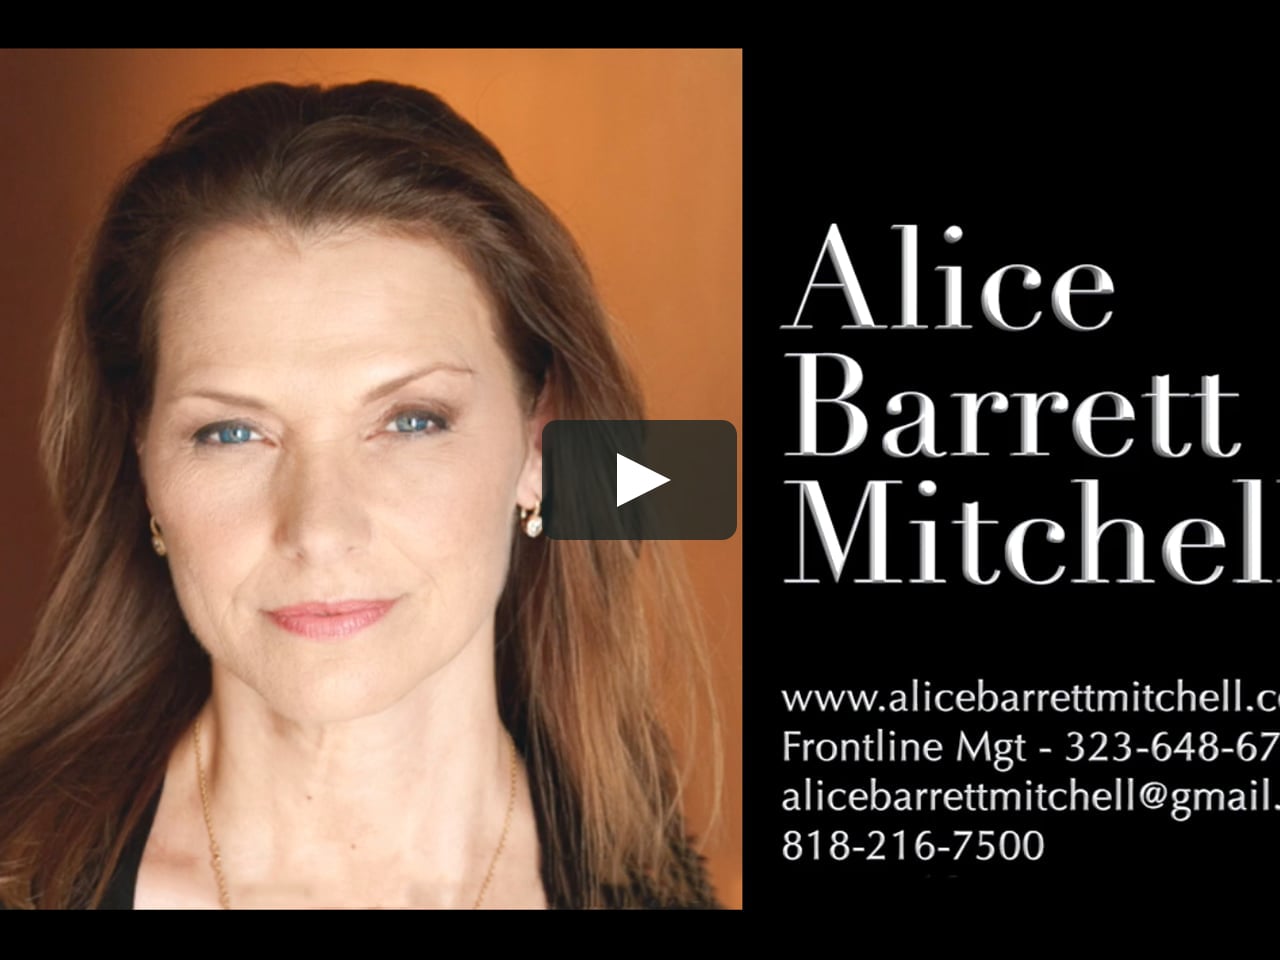 Alice Barrett Mitchell Commercial reel.